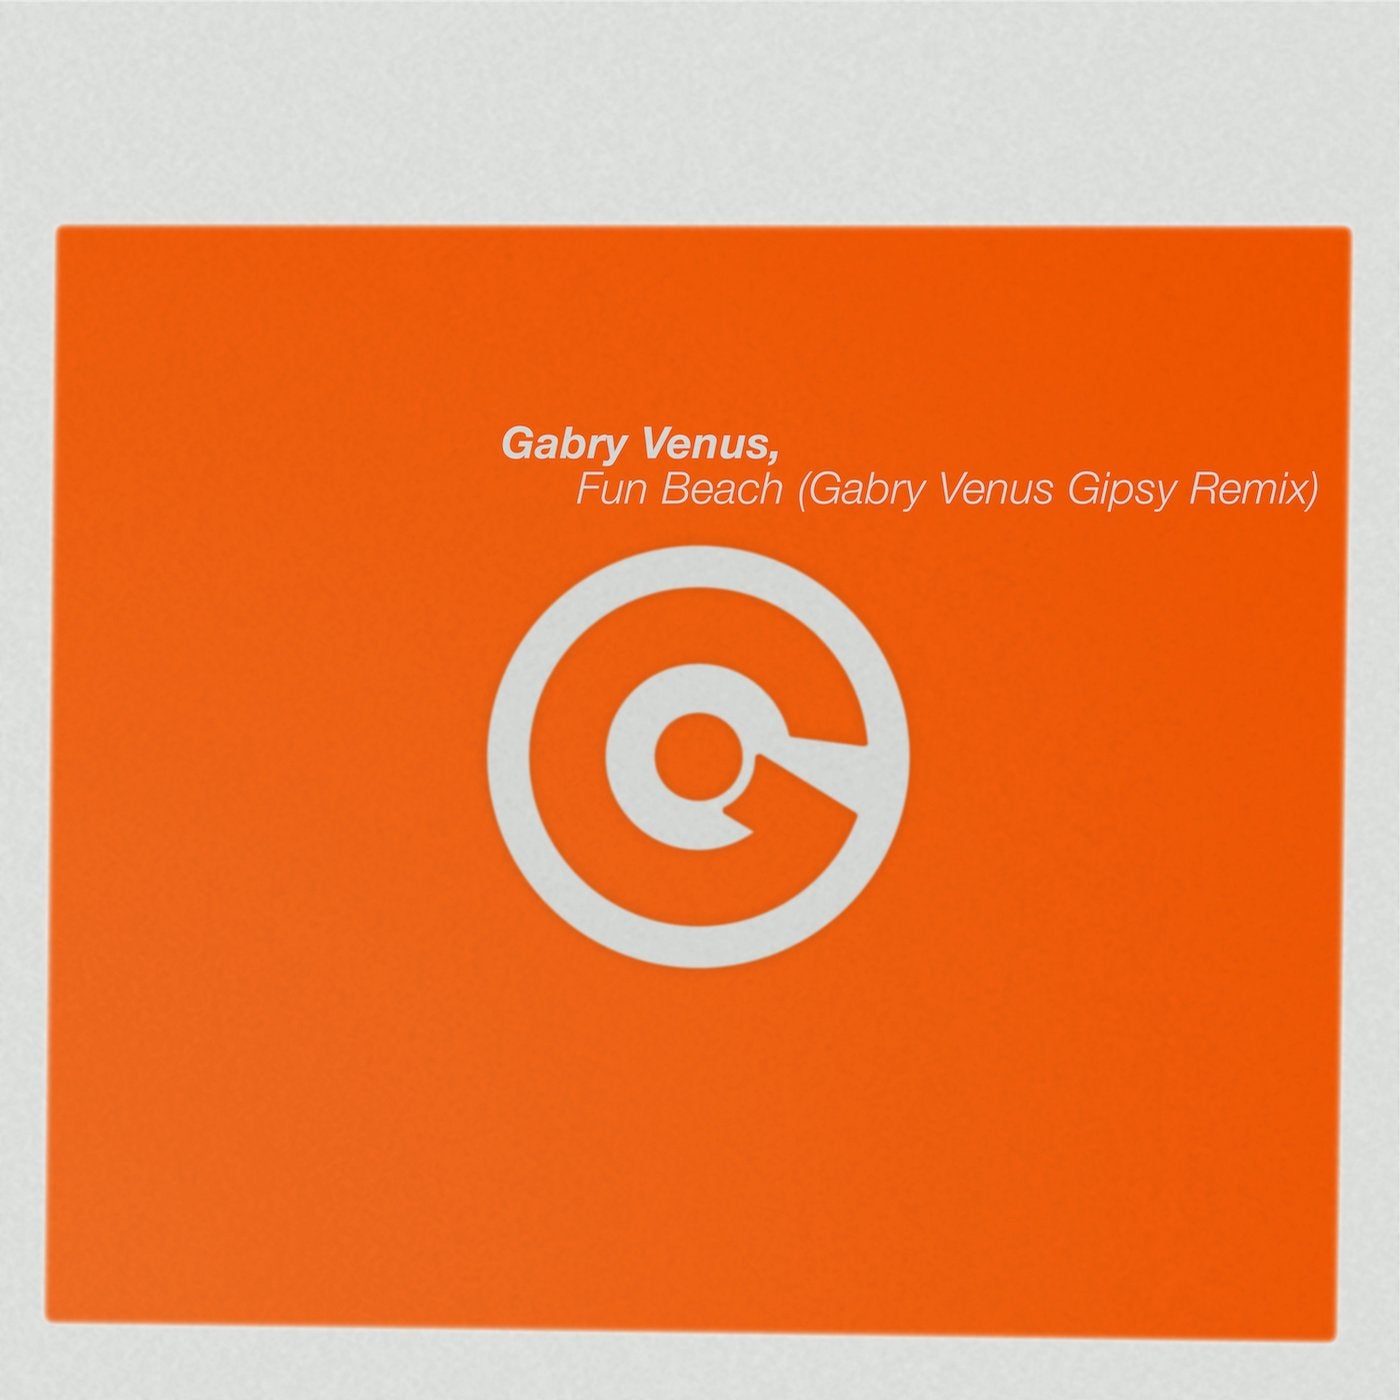 Fun Beach (Gabry Venus Gipsy Remix)